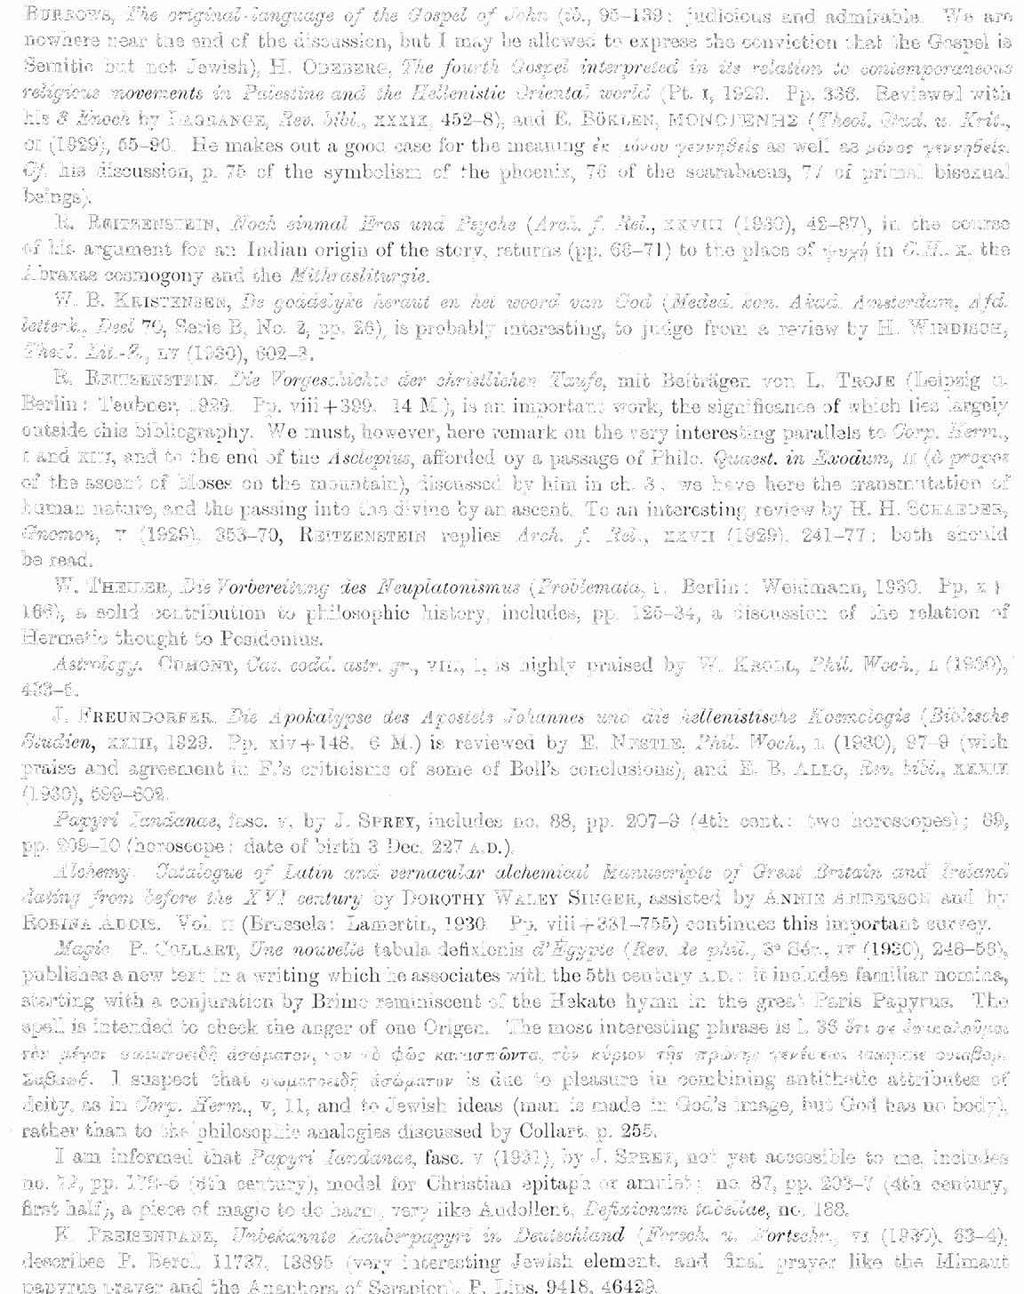 122 BIBLIOGRAPHY : GRAECO-ROMAN EGYPT (1929-1930) BURROWS, The original-language of the Oospel οf John (ib., 95-139: judicious and admirable.